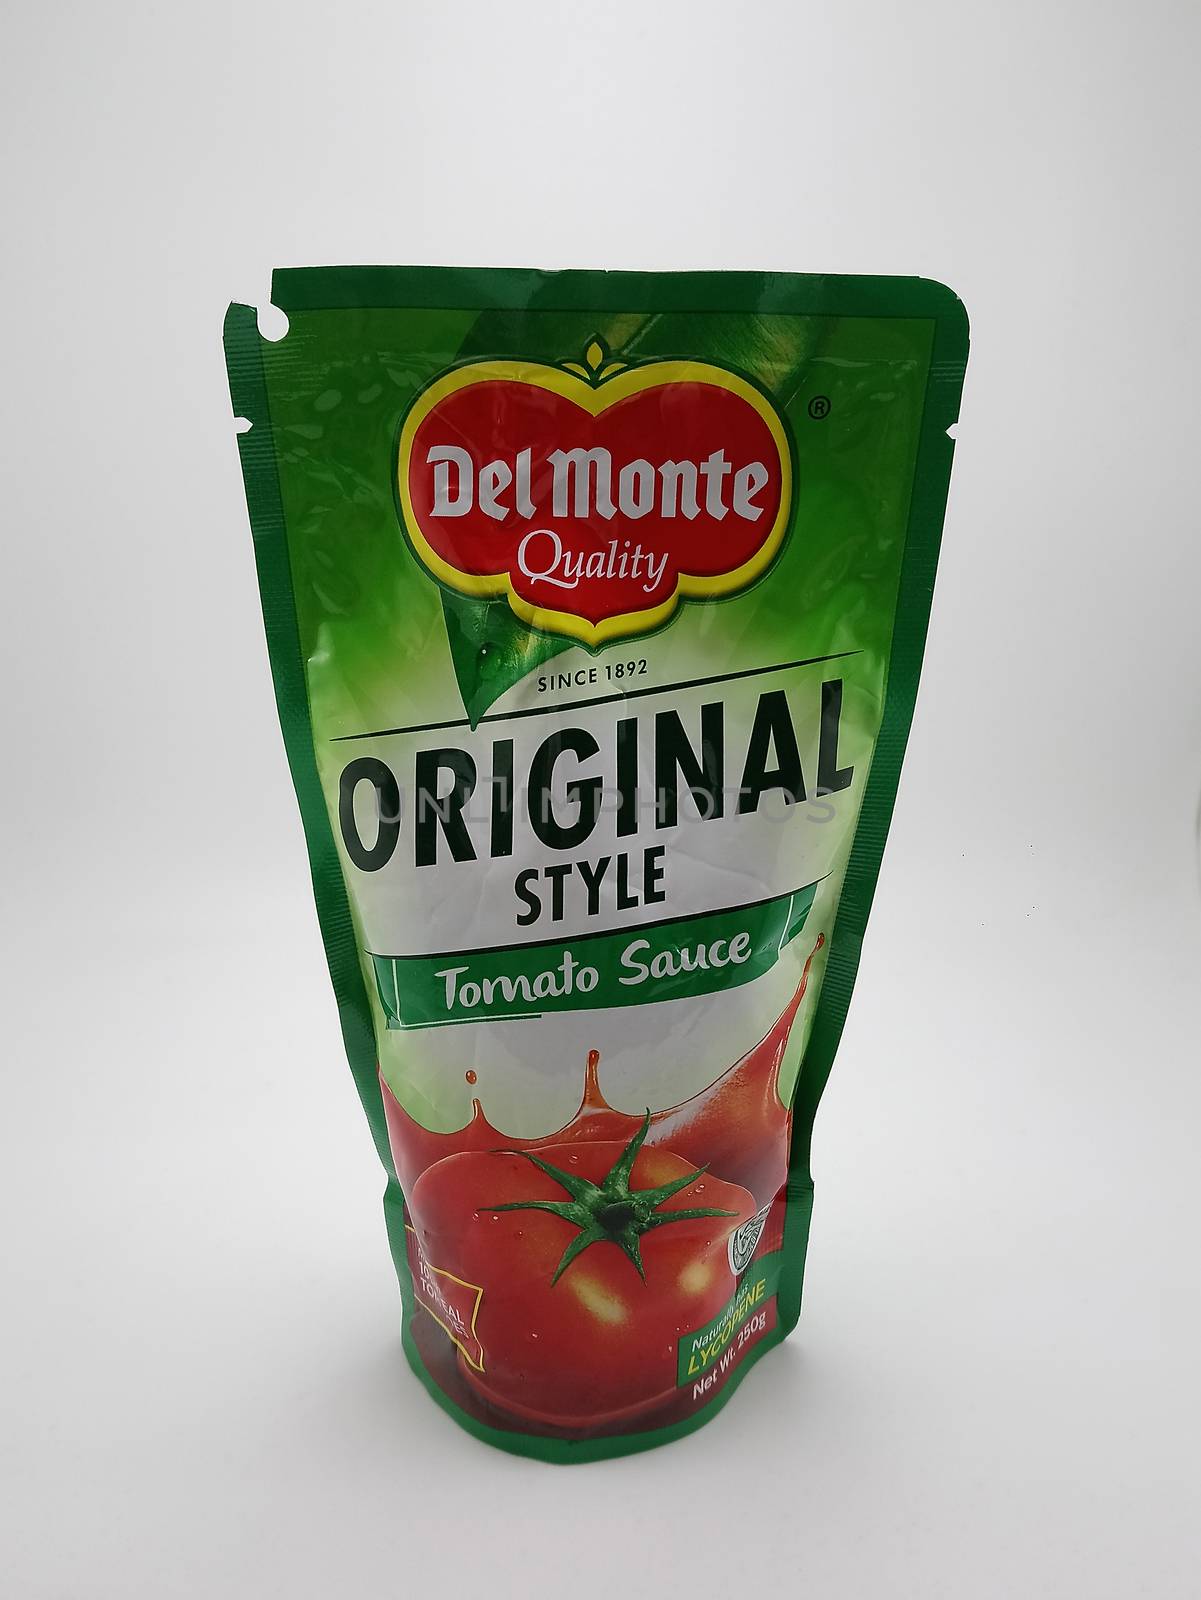 MANILA, PH - SEPT 25 - Del monte original style tomato sauce on September 25, 2020 in Manila, Philippines.